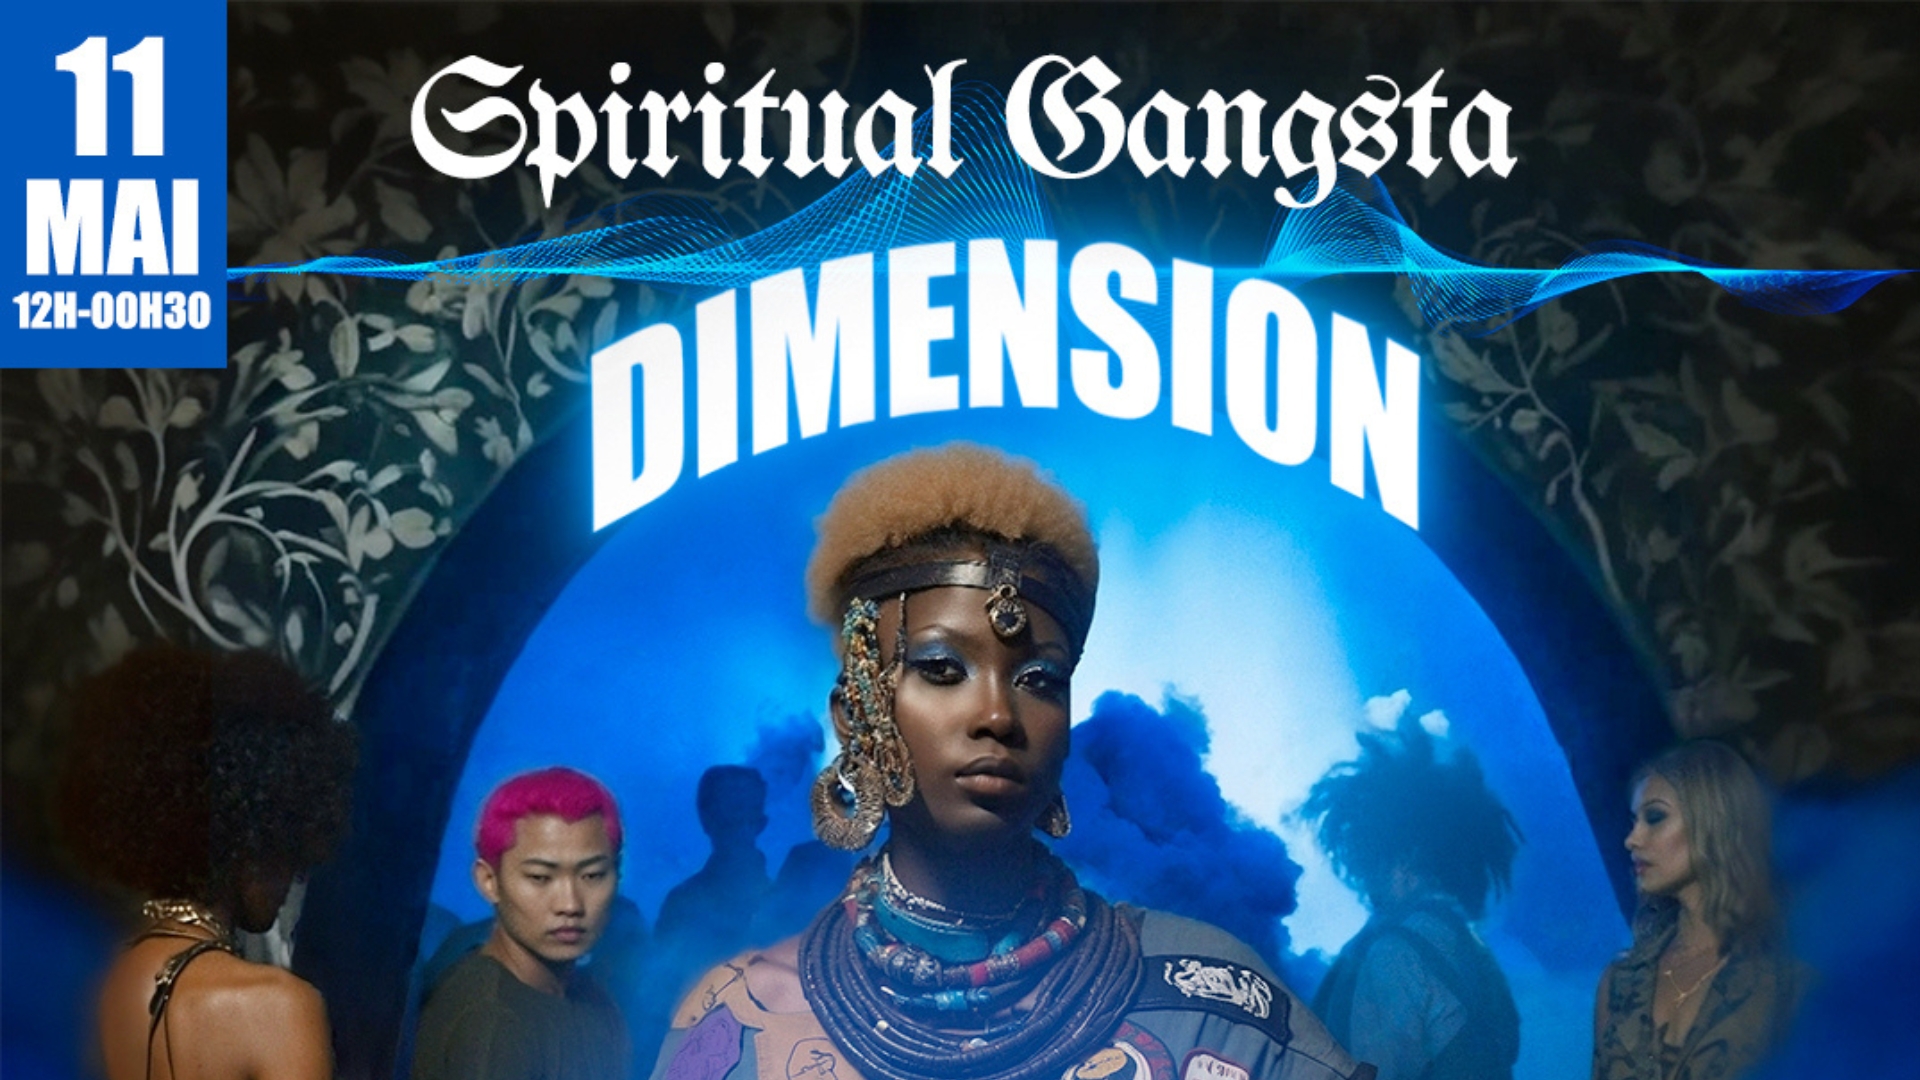 Spiritual Gangsta Dimension Festival